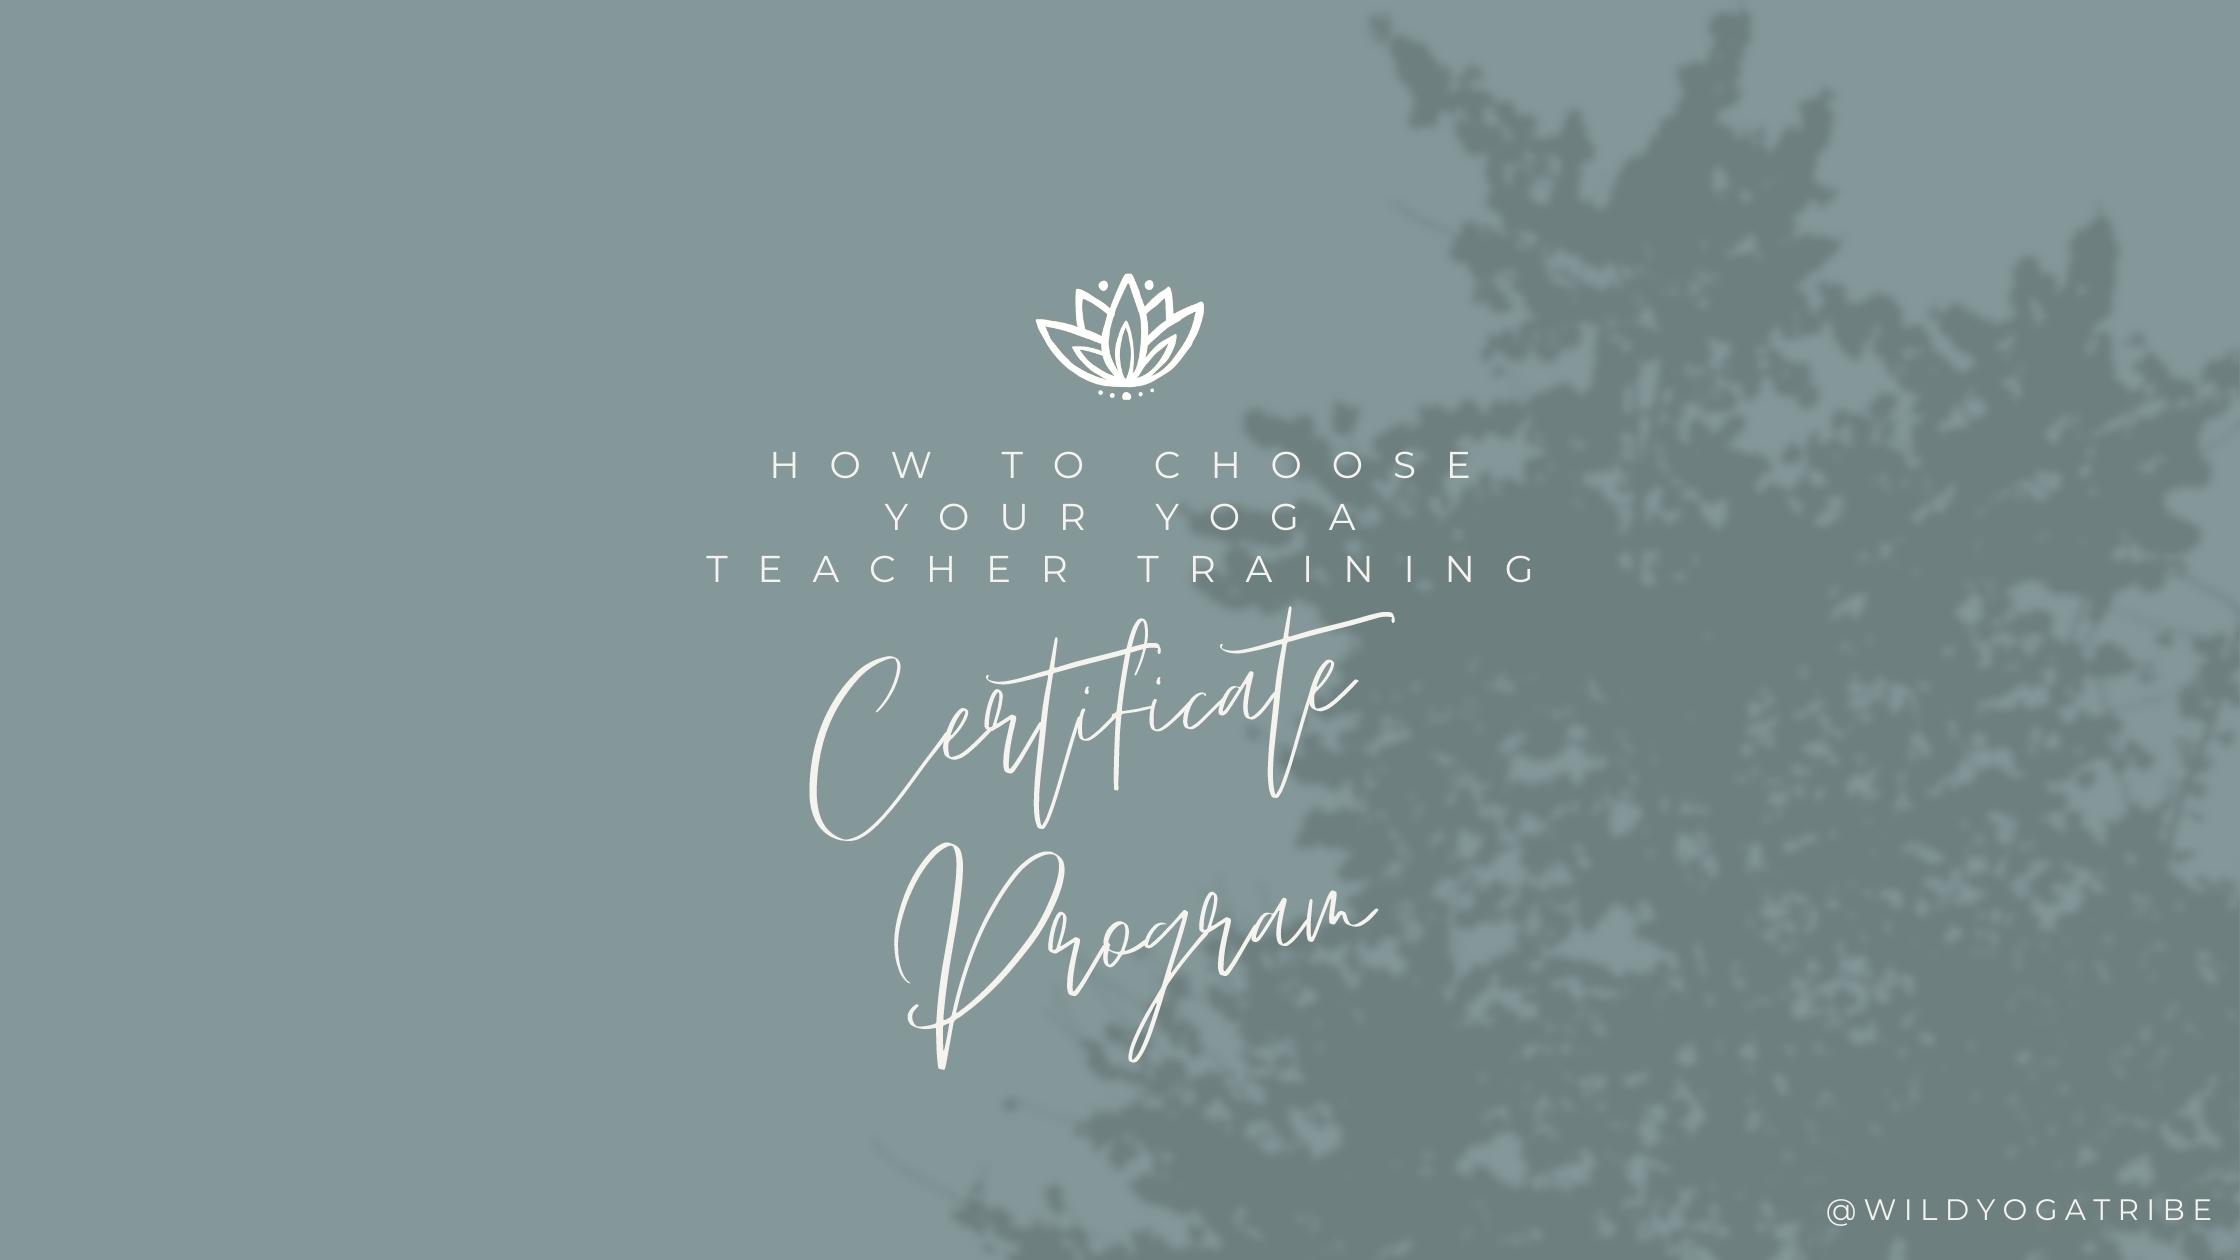 How To Choose Your Yoga Teacher Training Certification Program